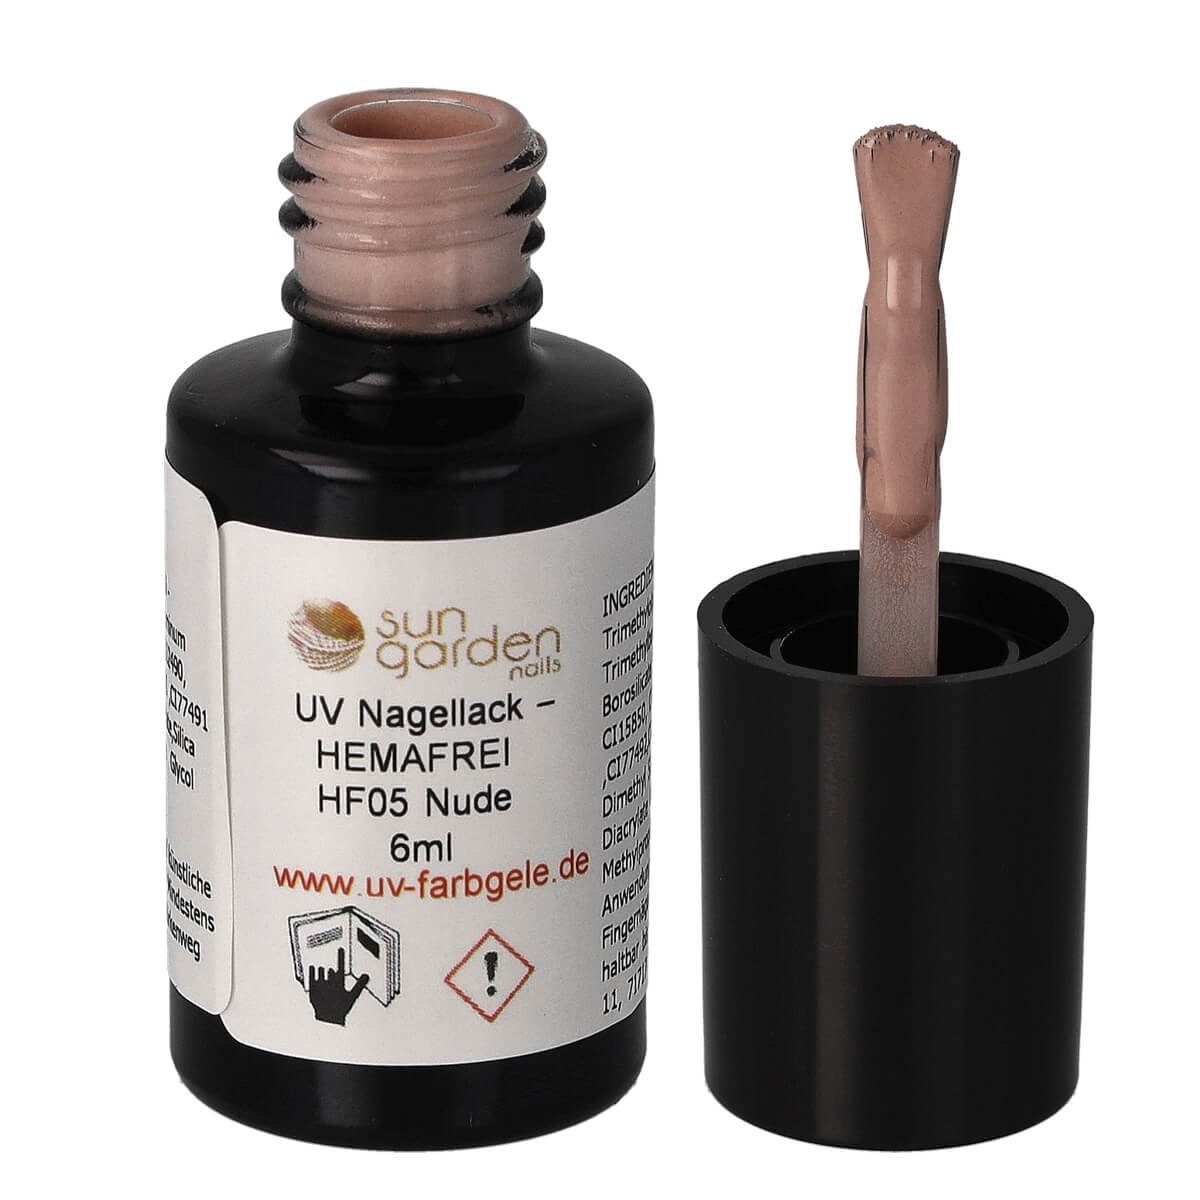 6ml UV HEMAFREI HF05 - Nagellack – Nails Garden Nude Sun Nagellack